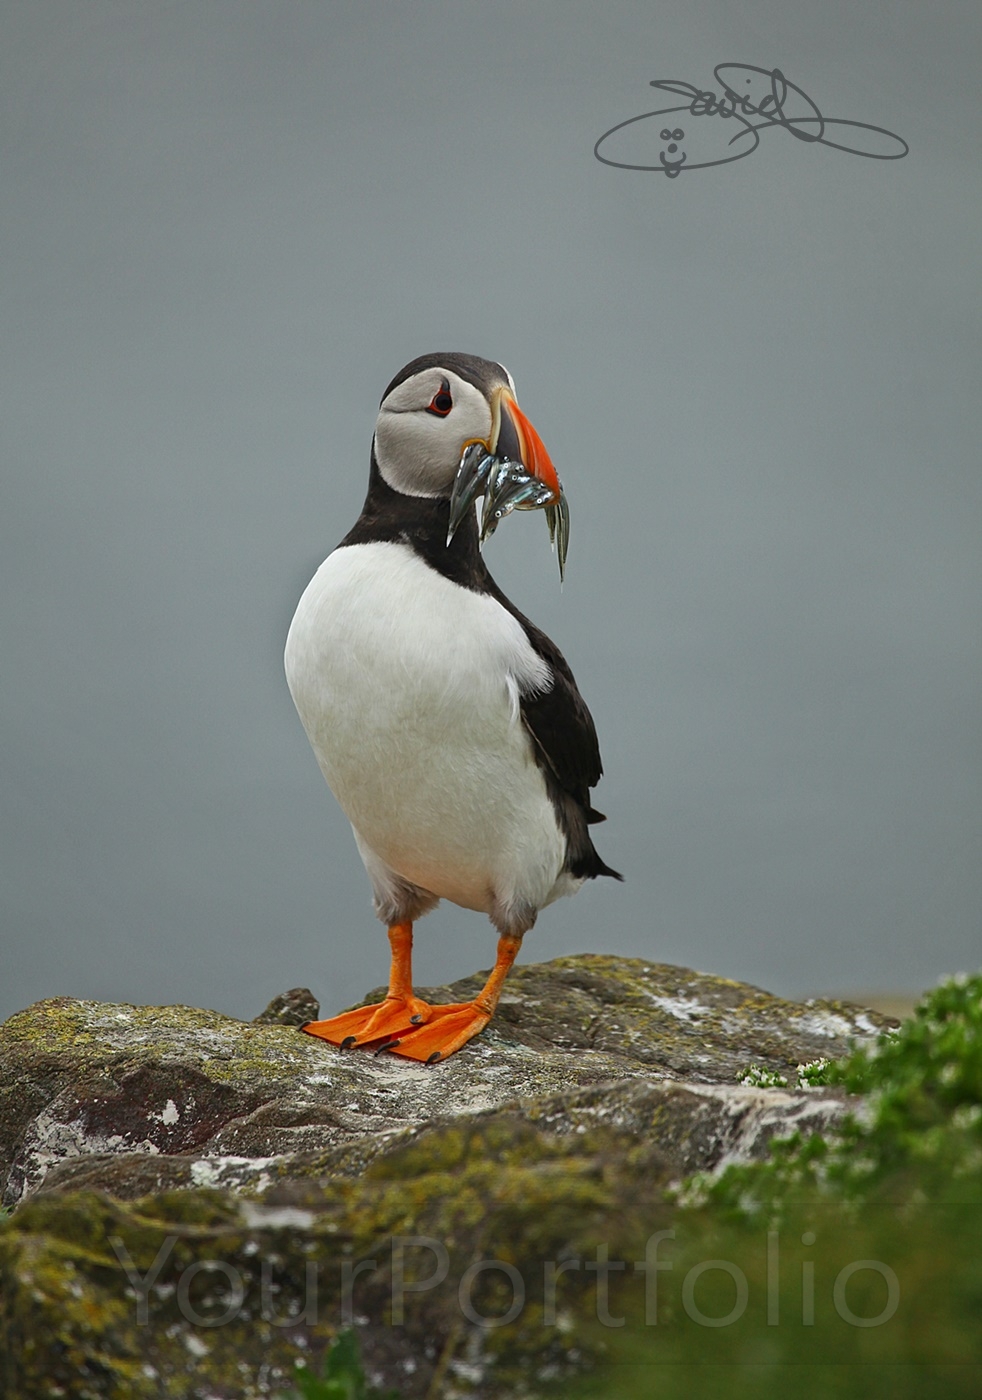 photographer DJPPhotography wildlife  photo taken at Farne Isles